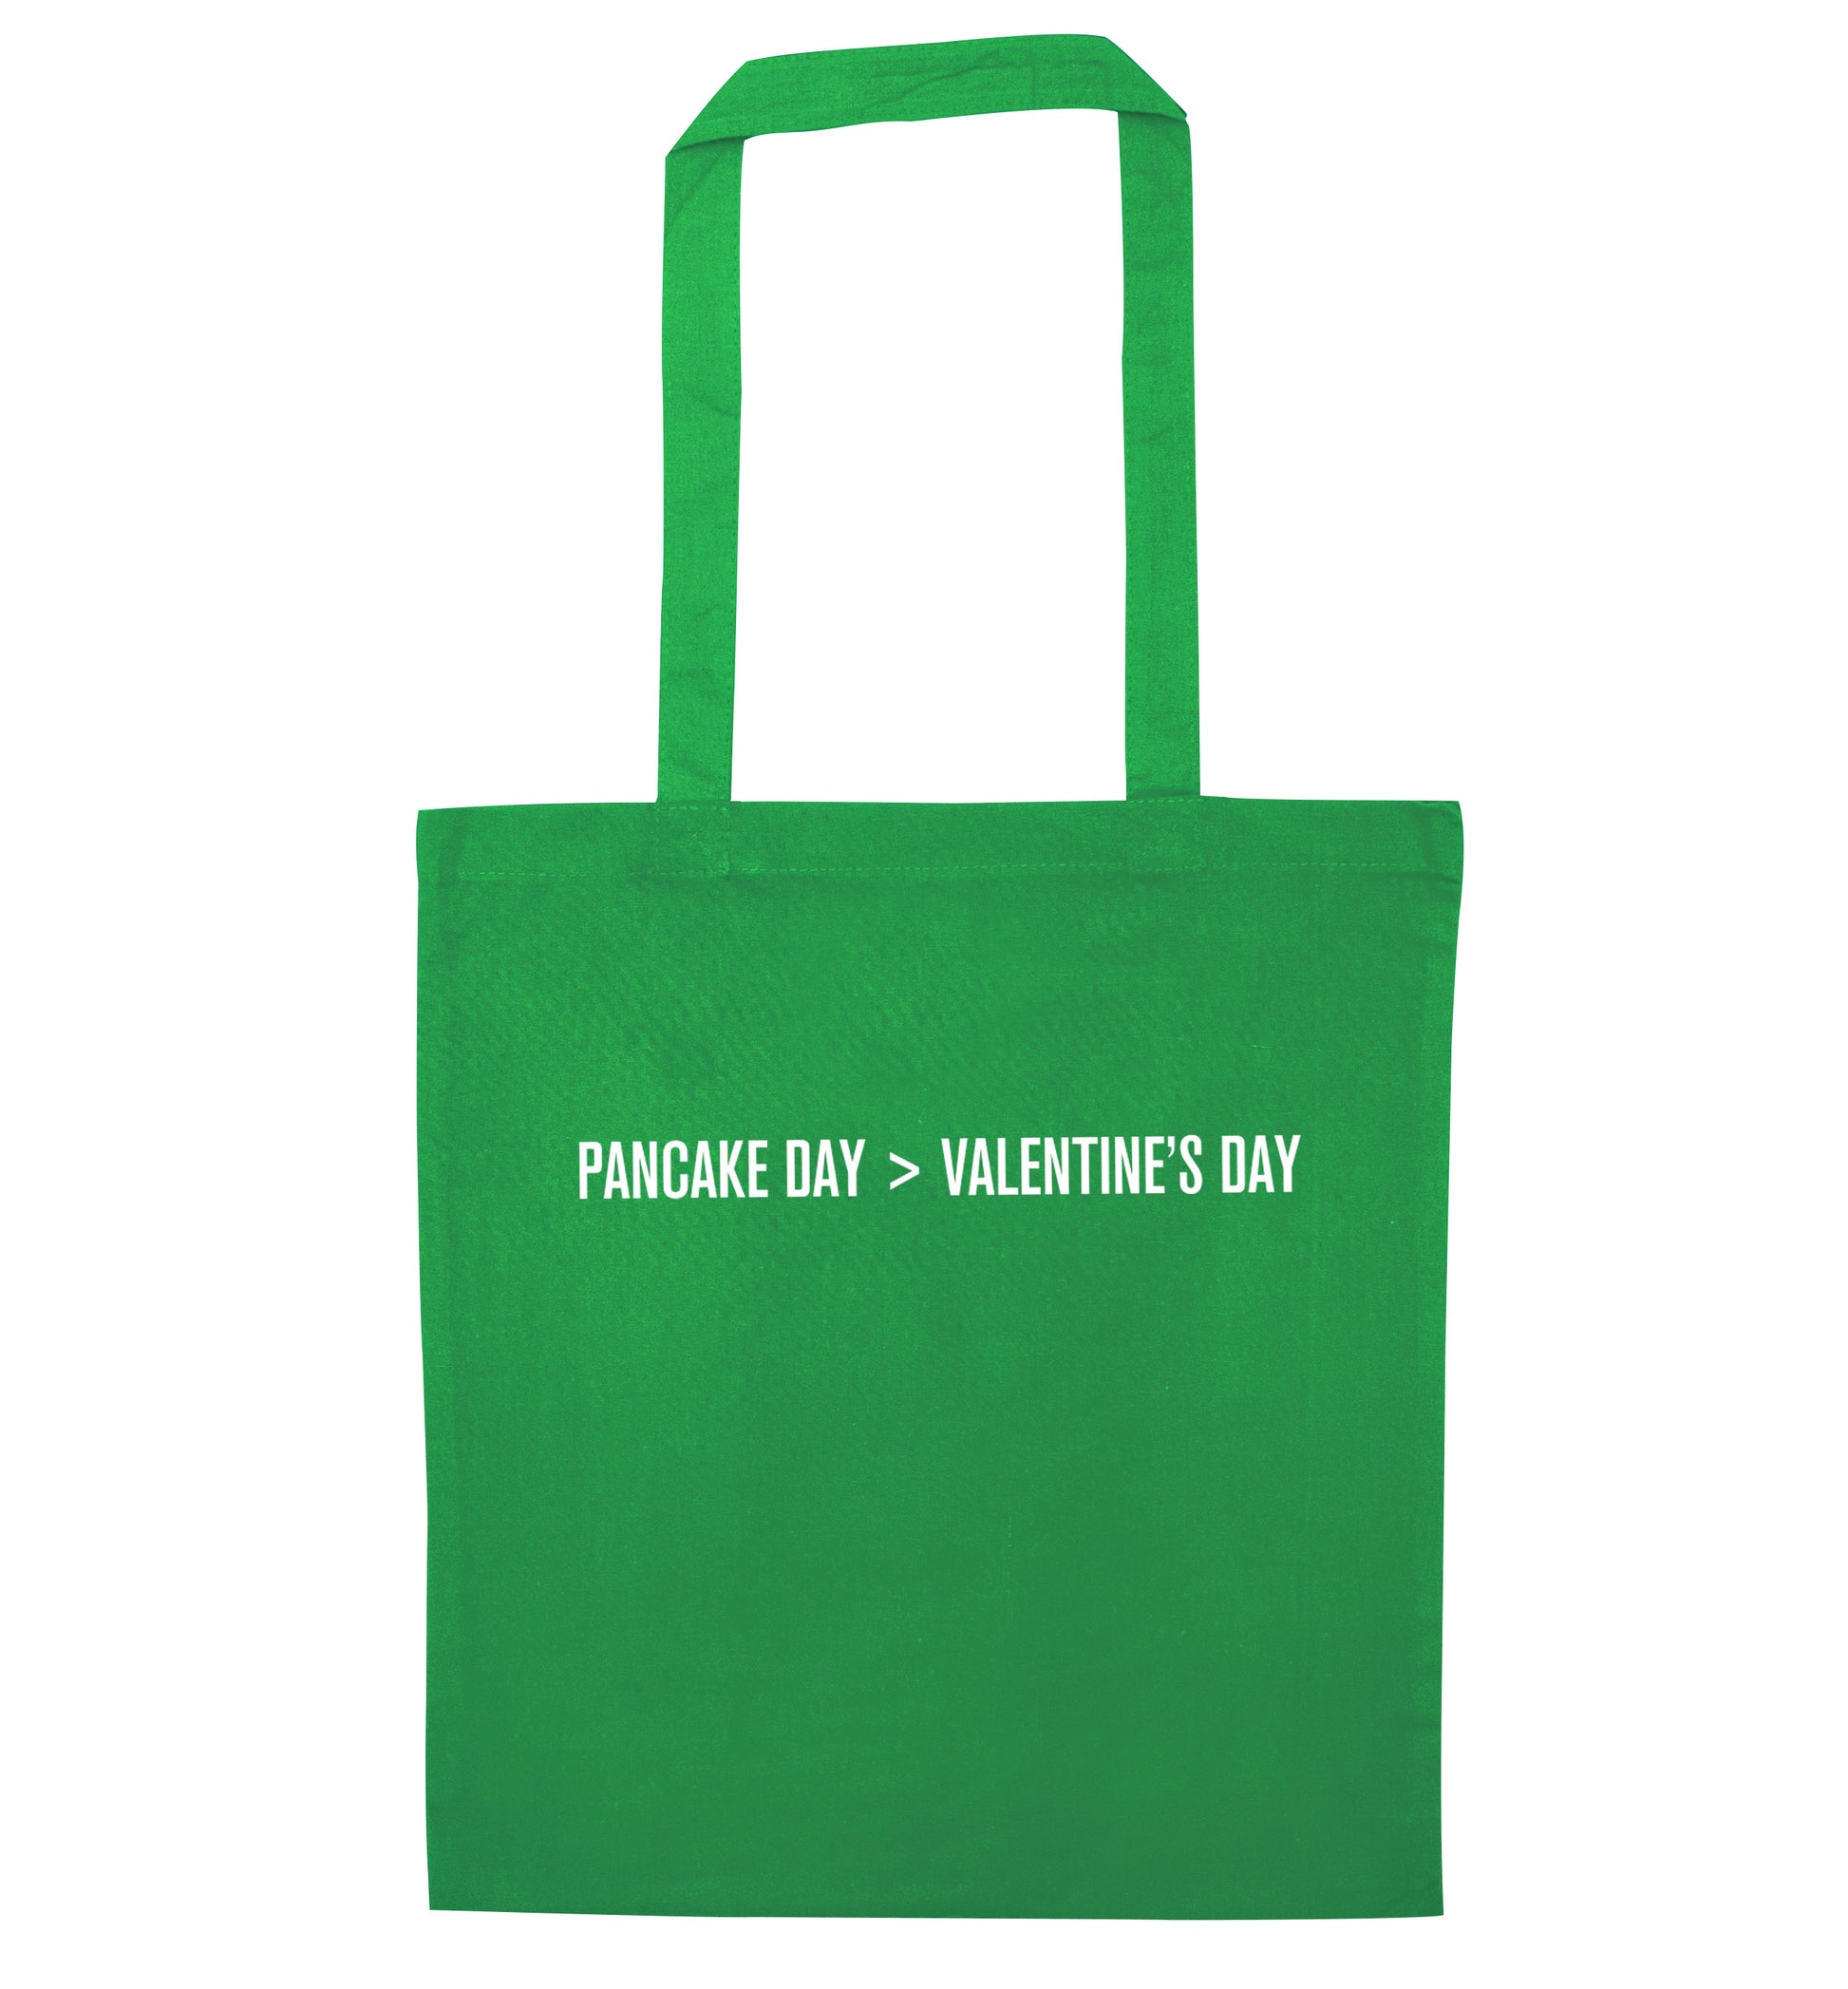 Valentine's day > pancake day green tote bag